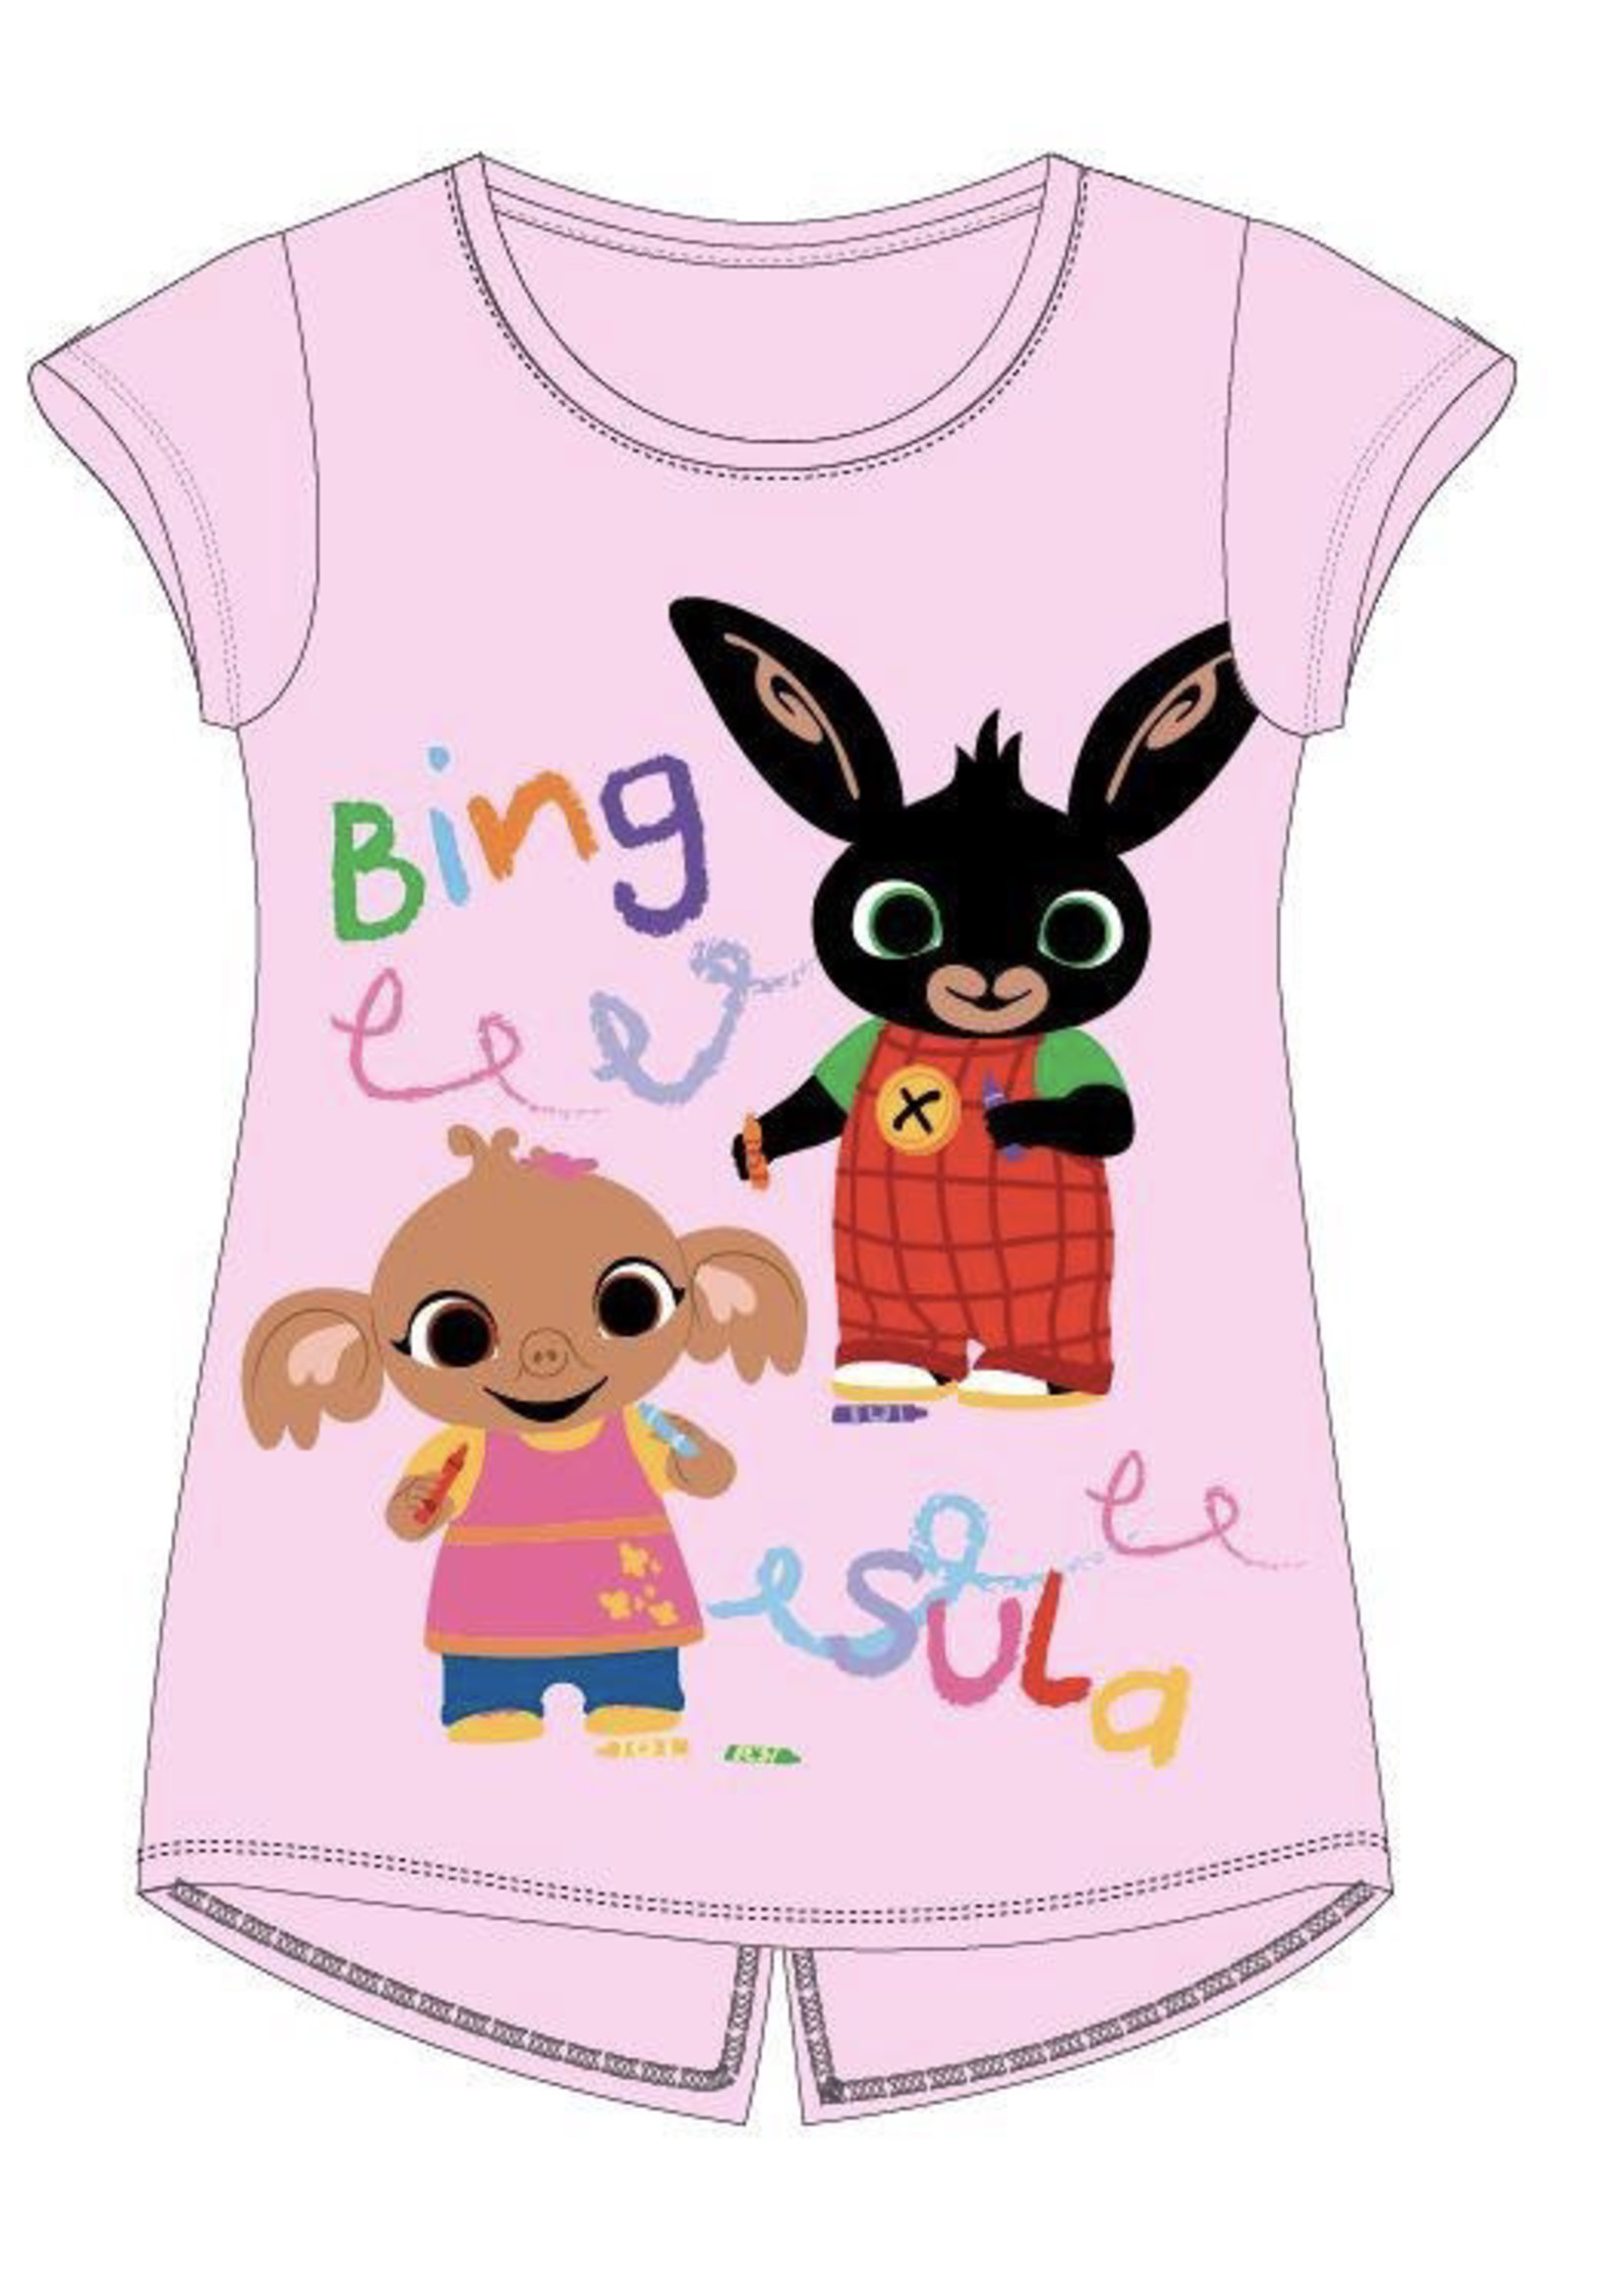 Bing T-shirt from Bing pink